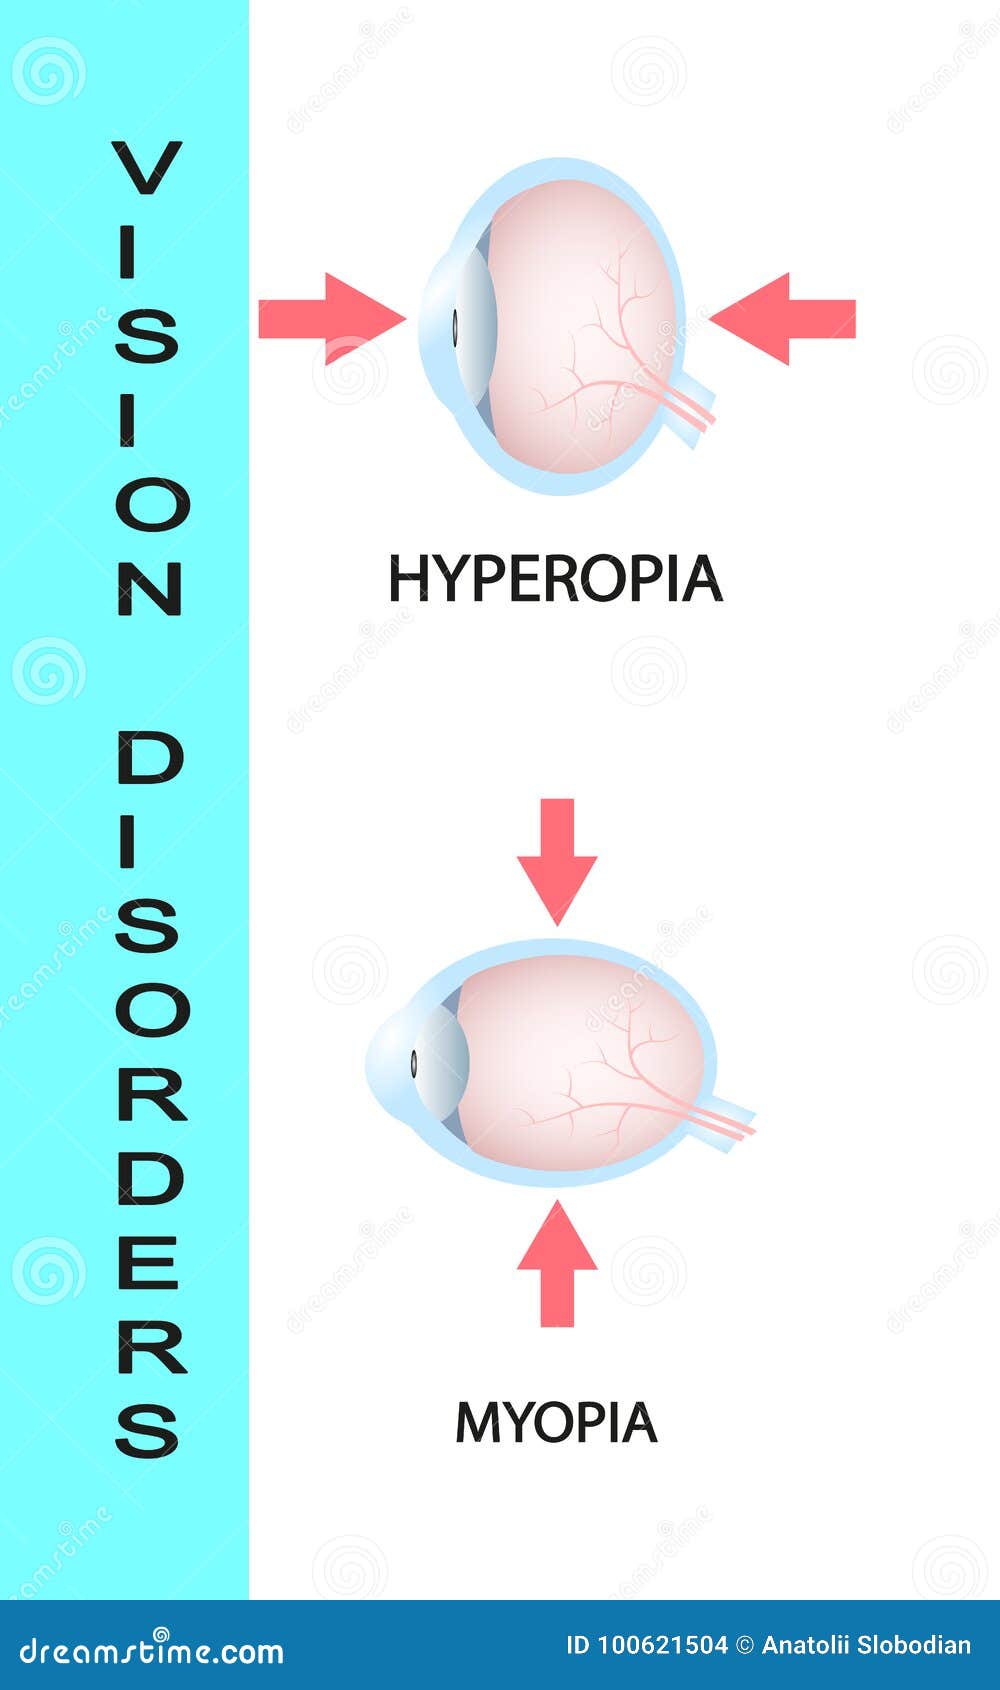 hyperopia plusz 6)